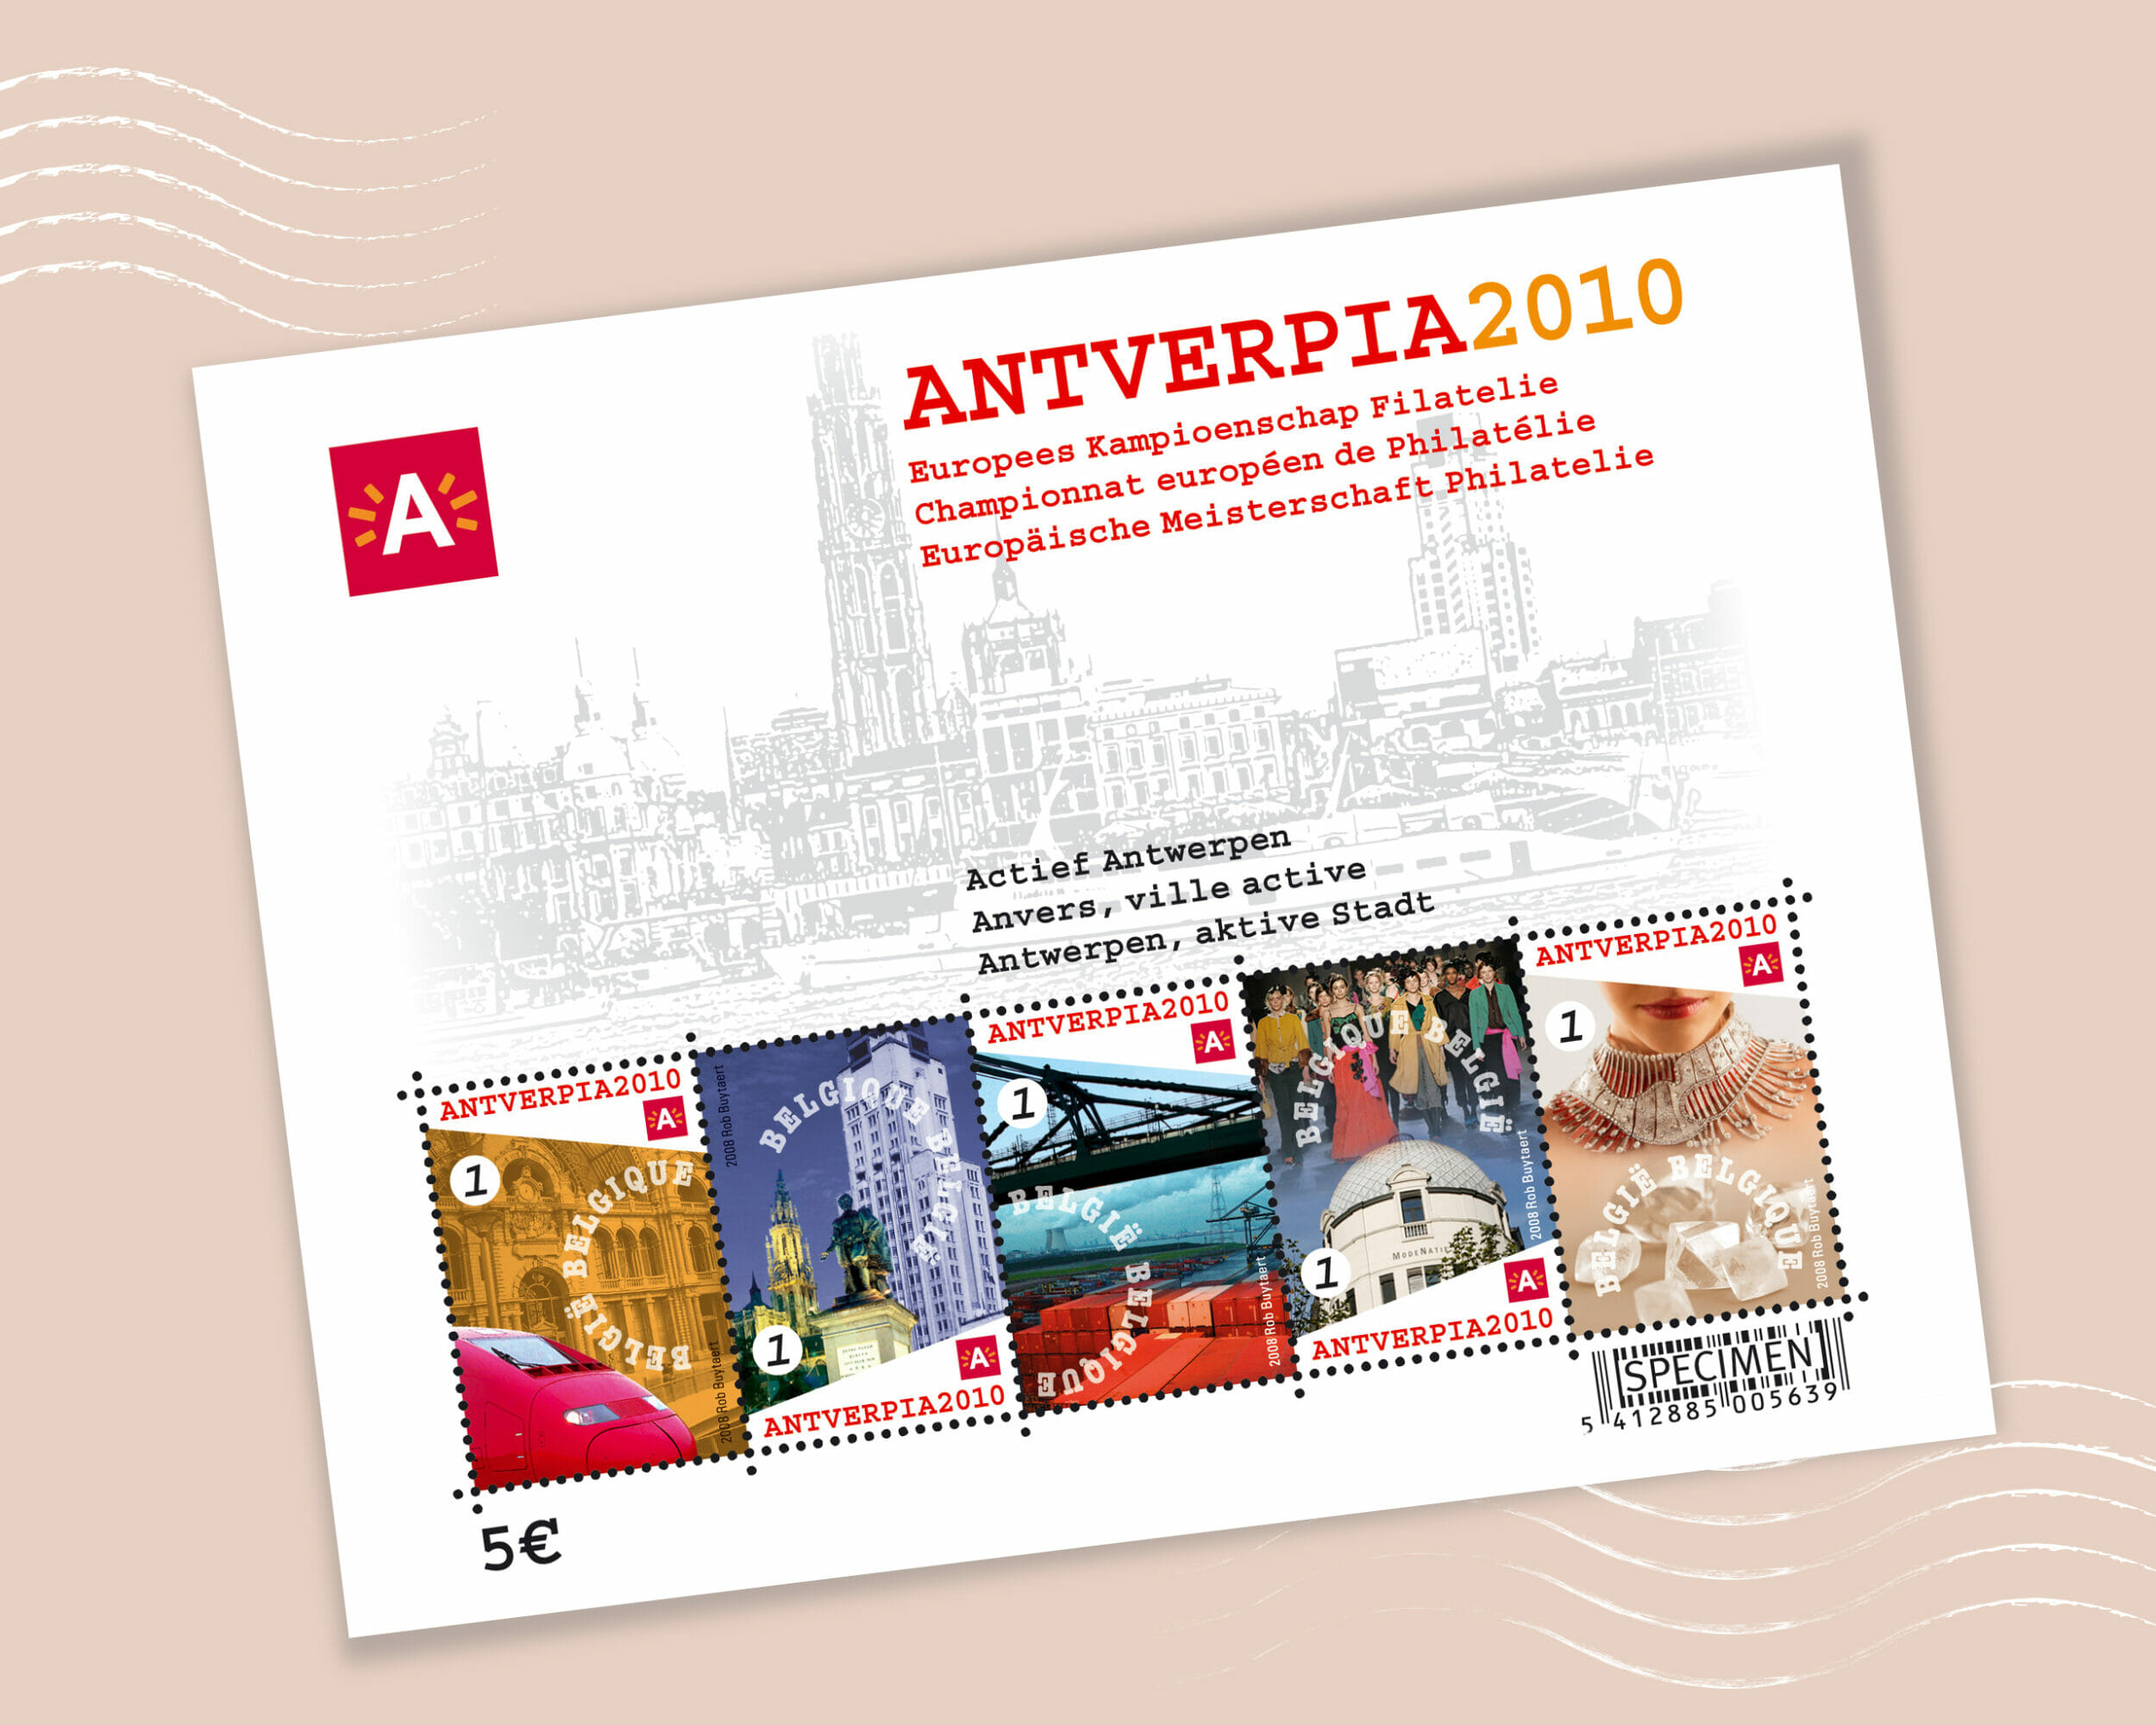 Antverpia 2010 postal stamps